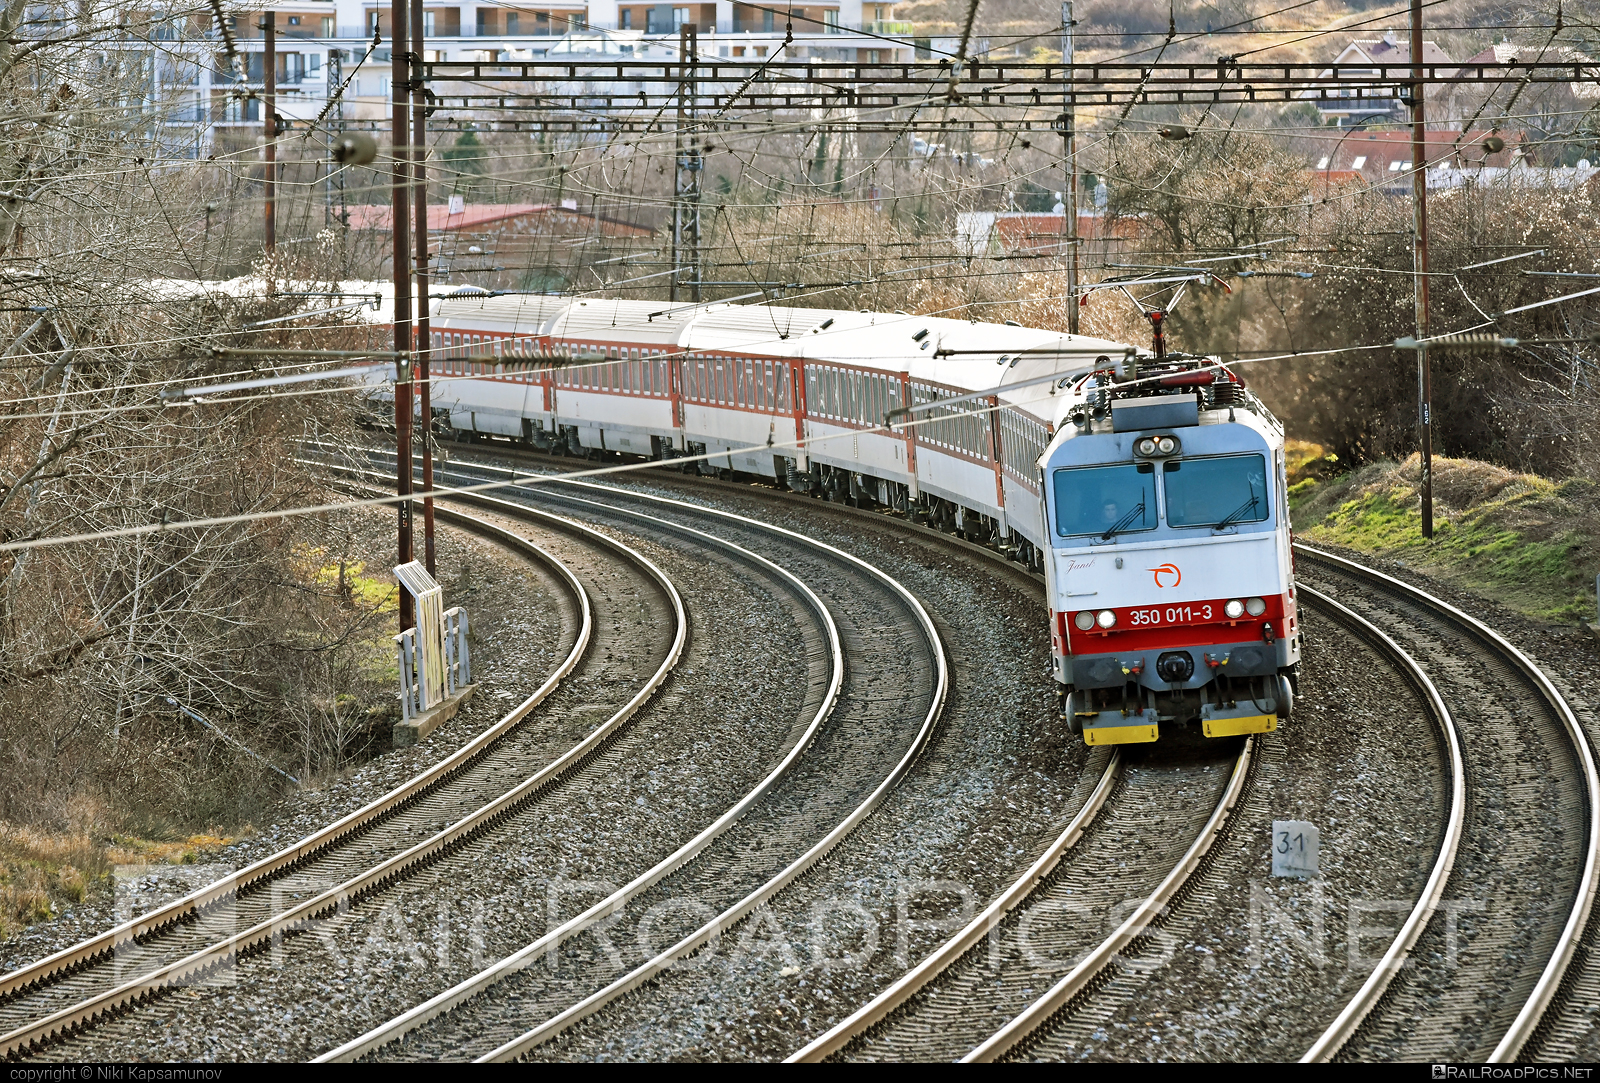 Škoda 55E - 350 011-3 operated by Železničná Spoločnost' Slovensko, a.s. #ZeleznicnaSpolocnostSlovensko #gorila #locomotive350 #skoda #skoda55e #tatran #zssk